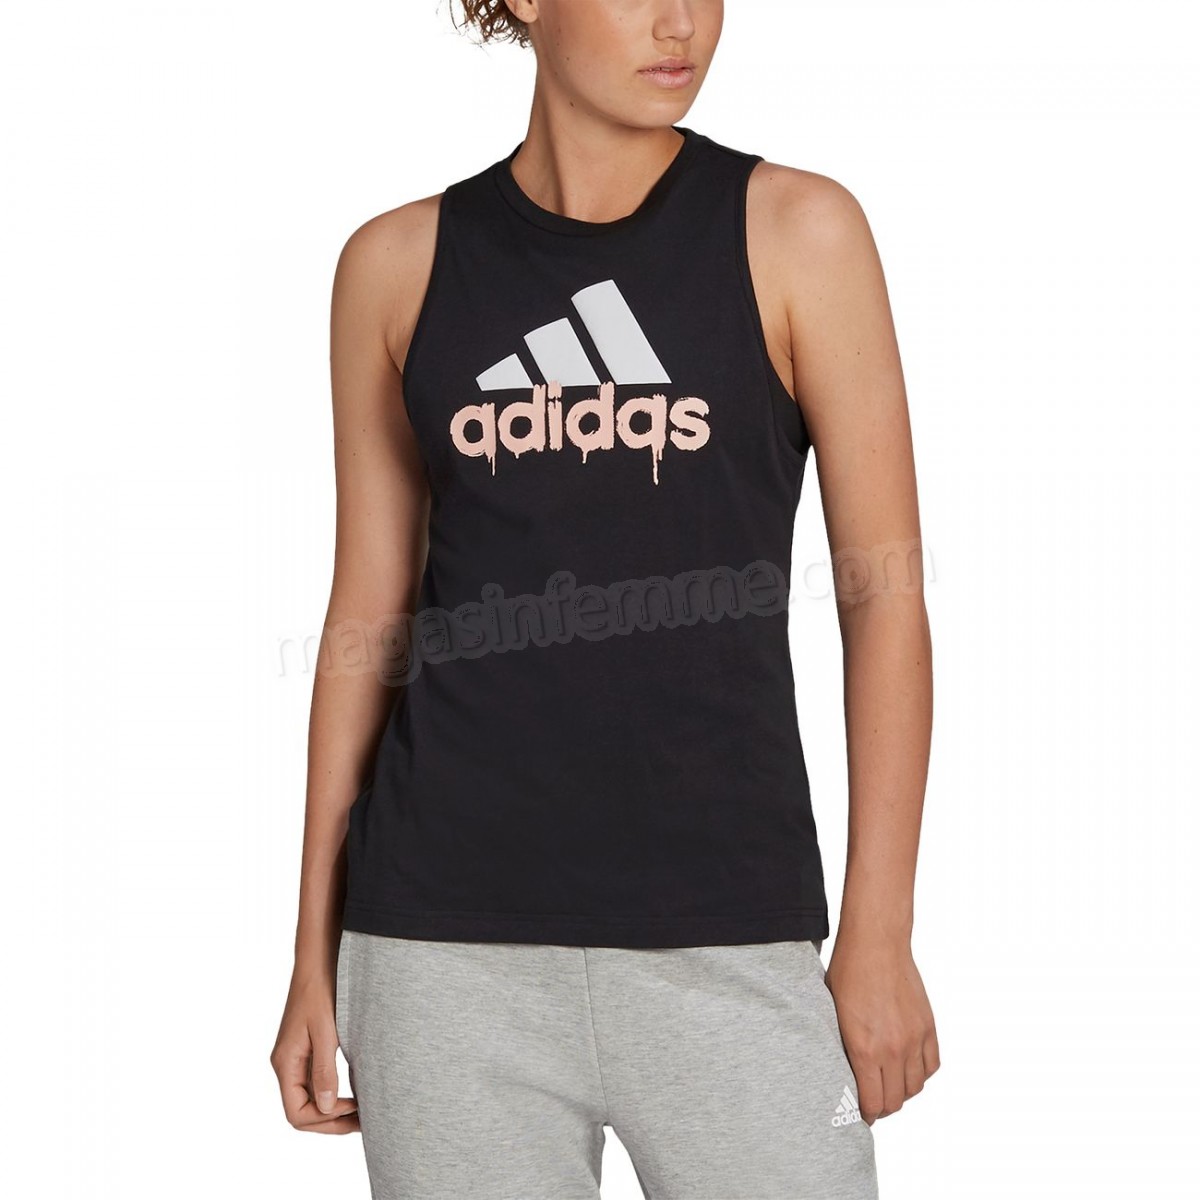 Adidas-Fitness femme ADIDAS Débardeur femme adidas Graphic Basic en solde - -7